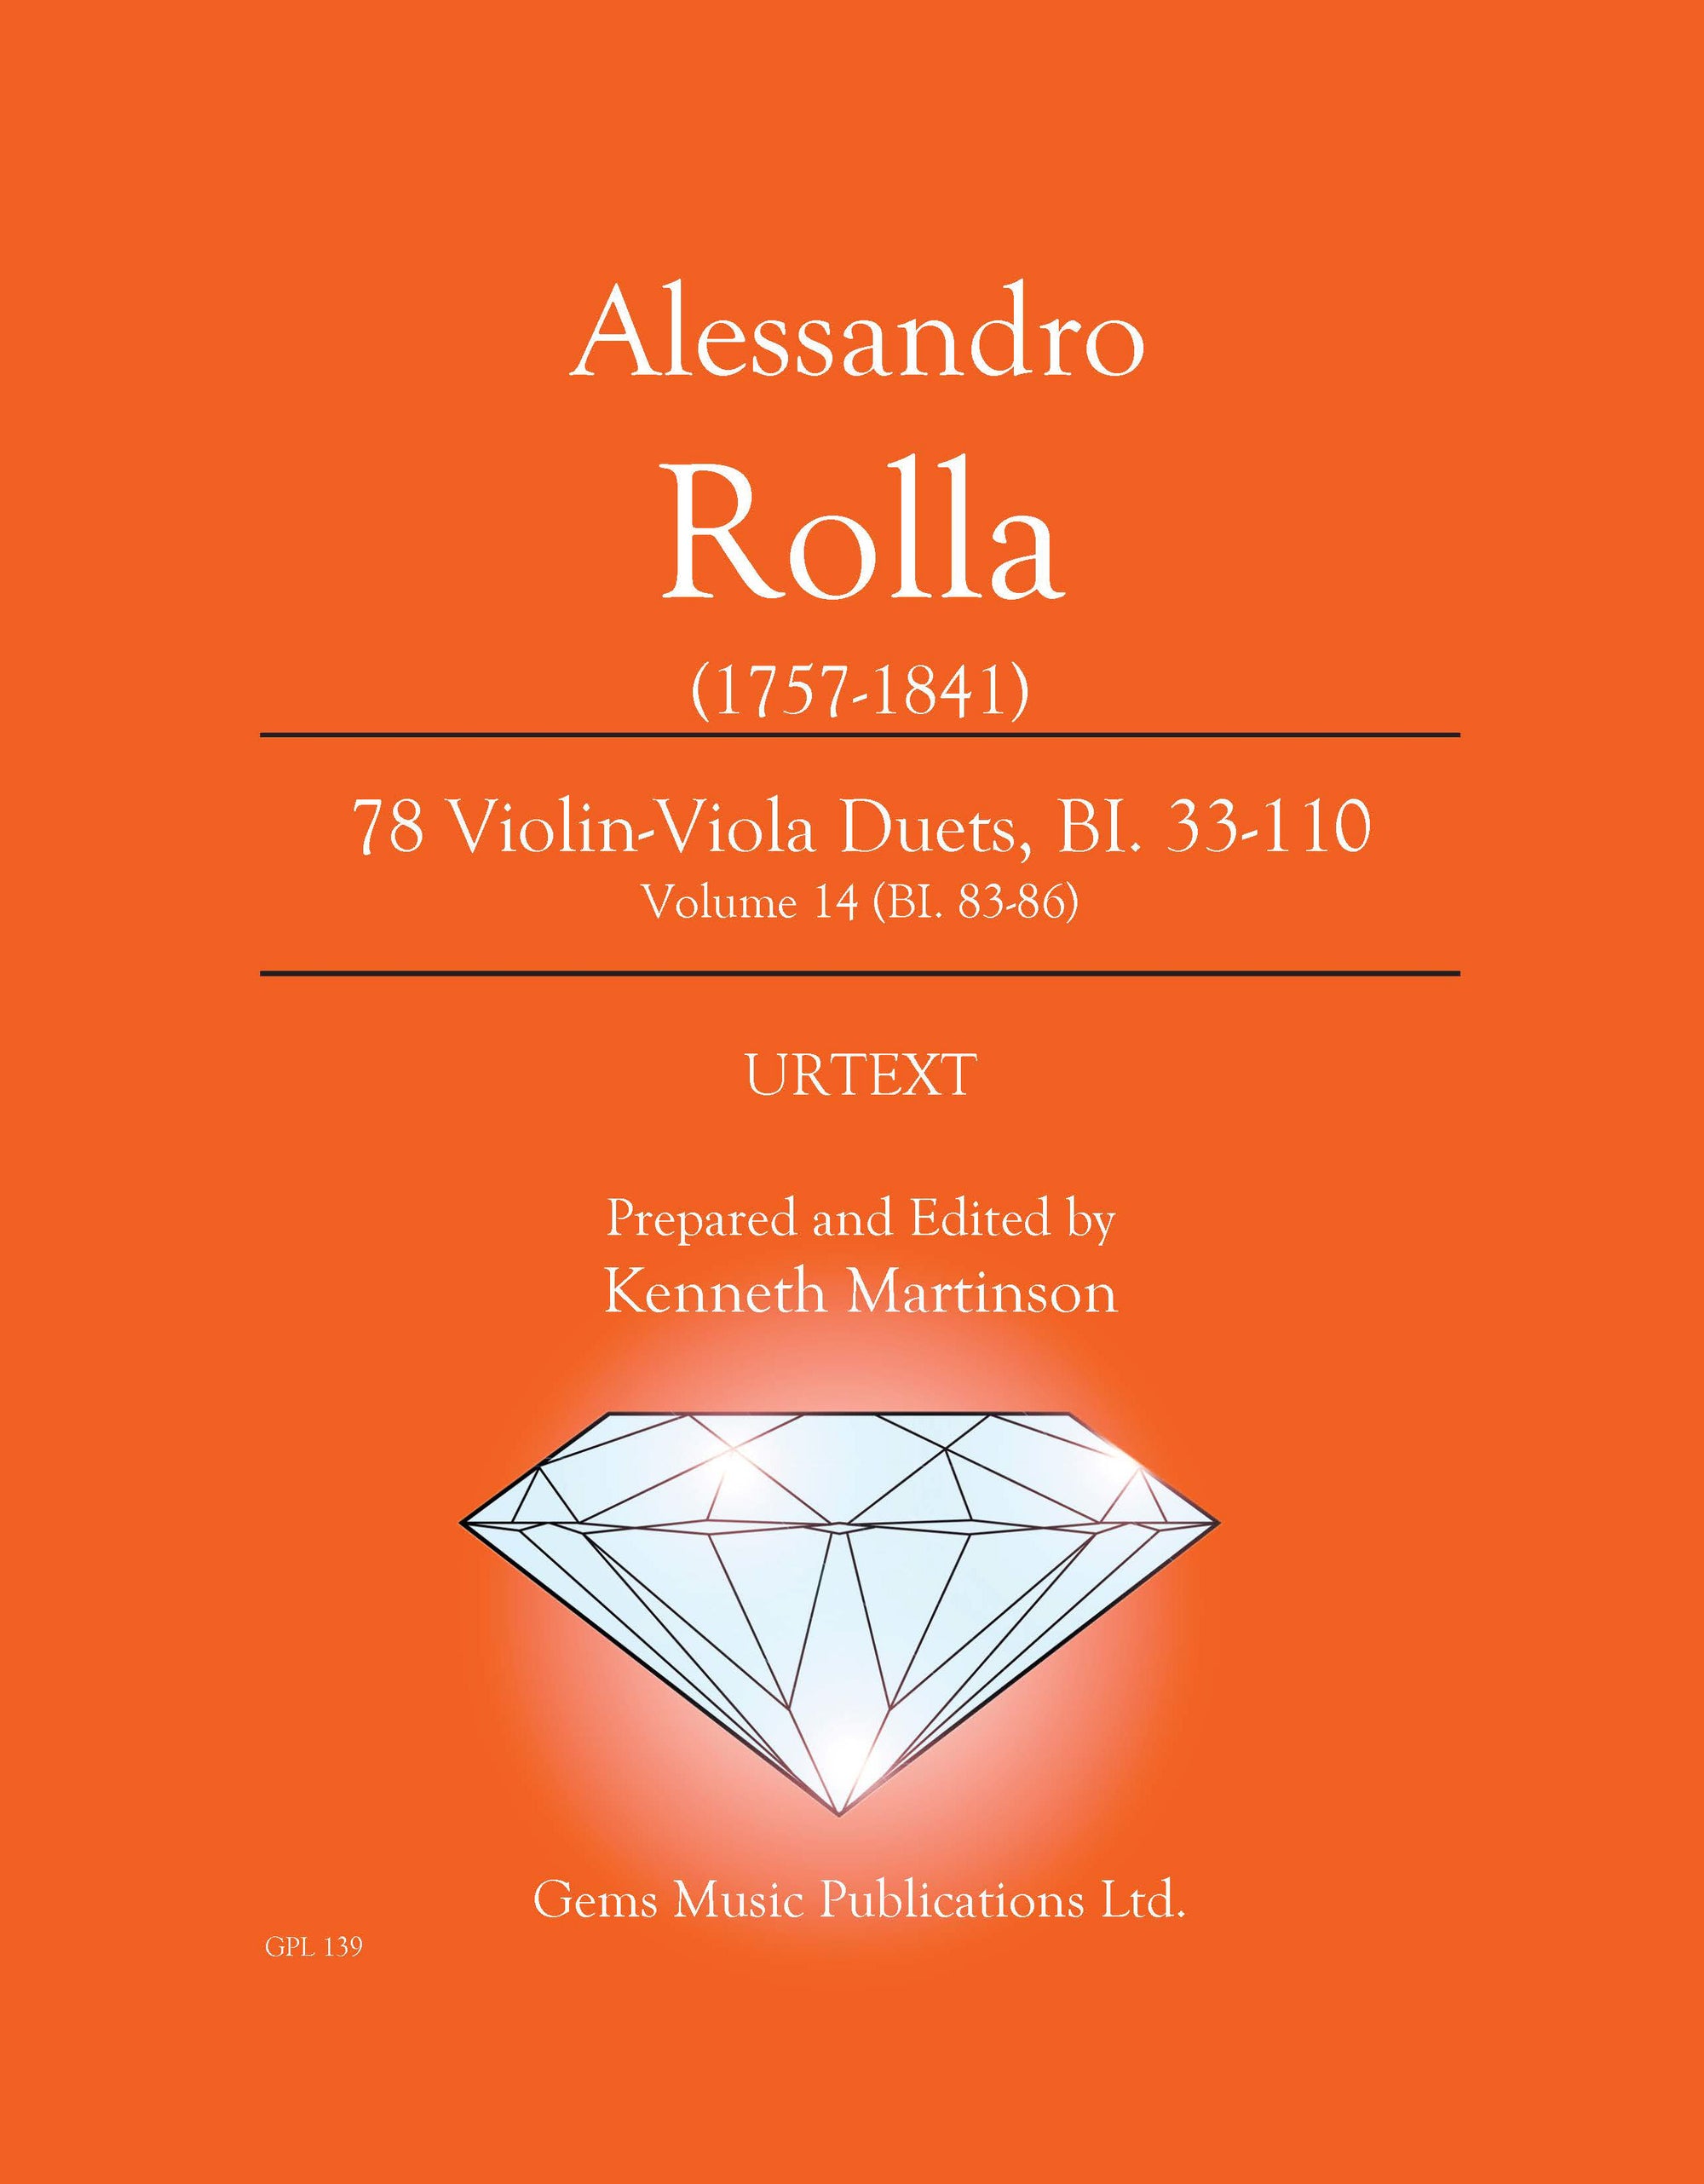 Rolla: Violin-Viola Duets - Volume 14 (BI. 83-86)